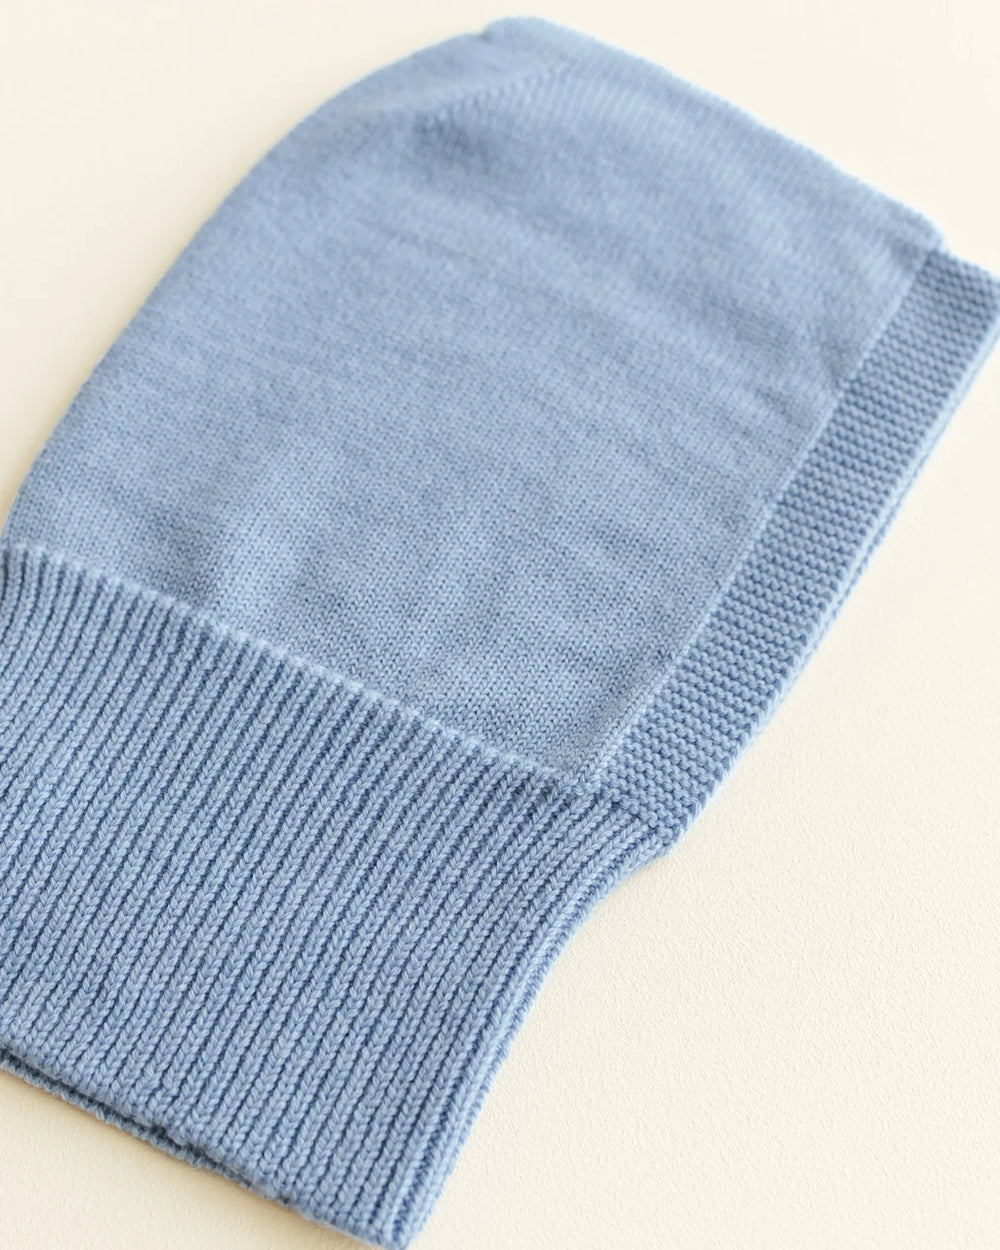 Balaclava bleu pâle en laine mérinos